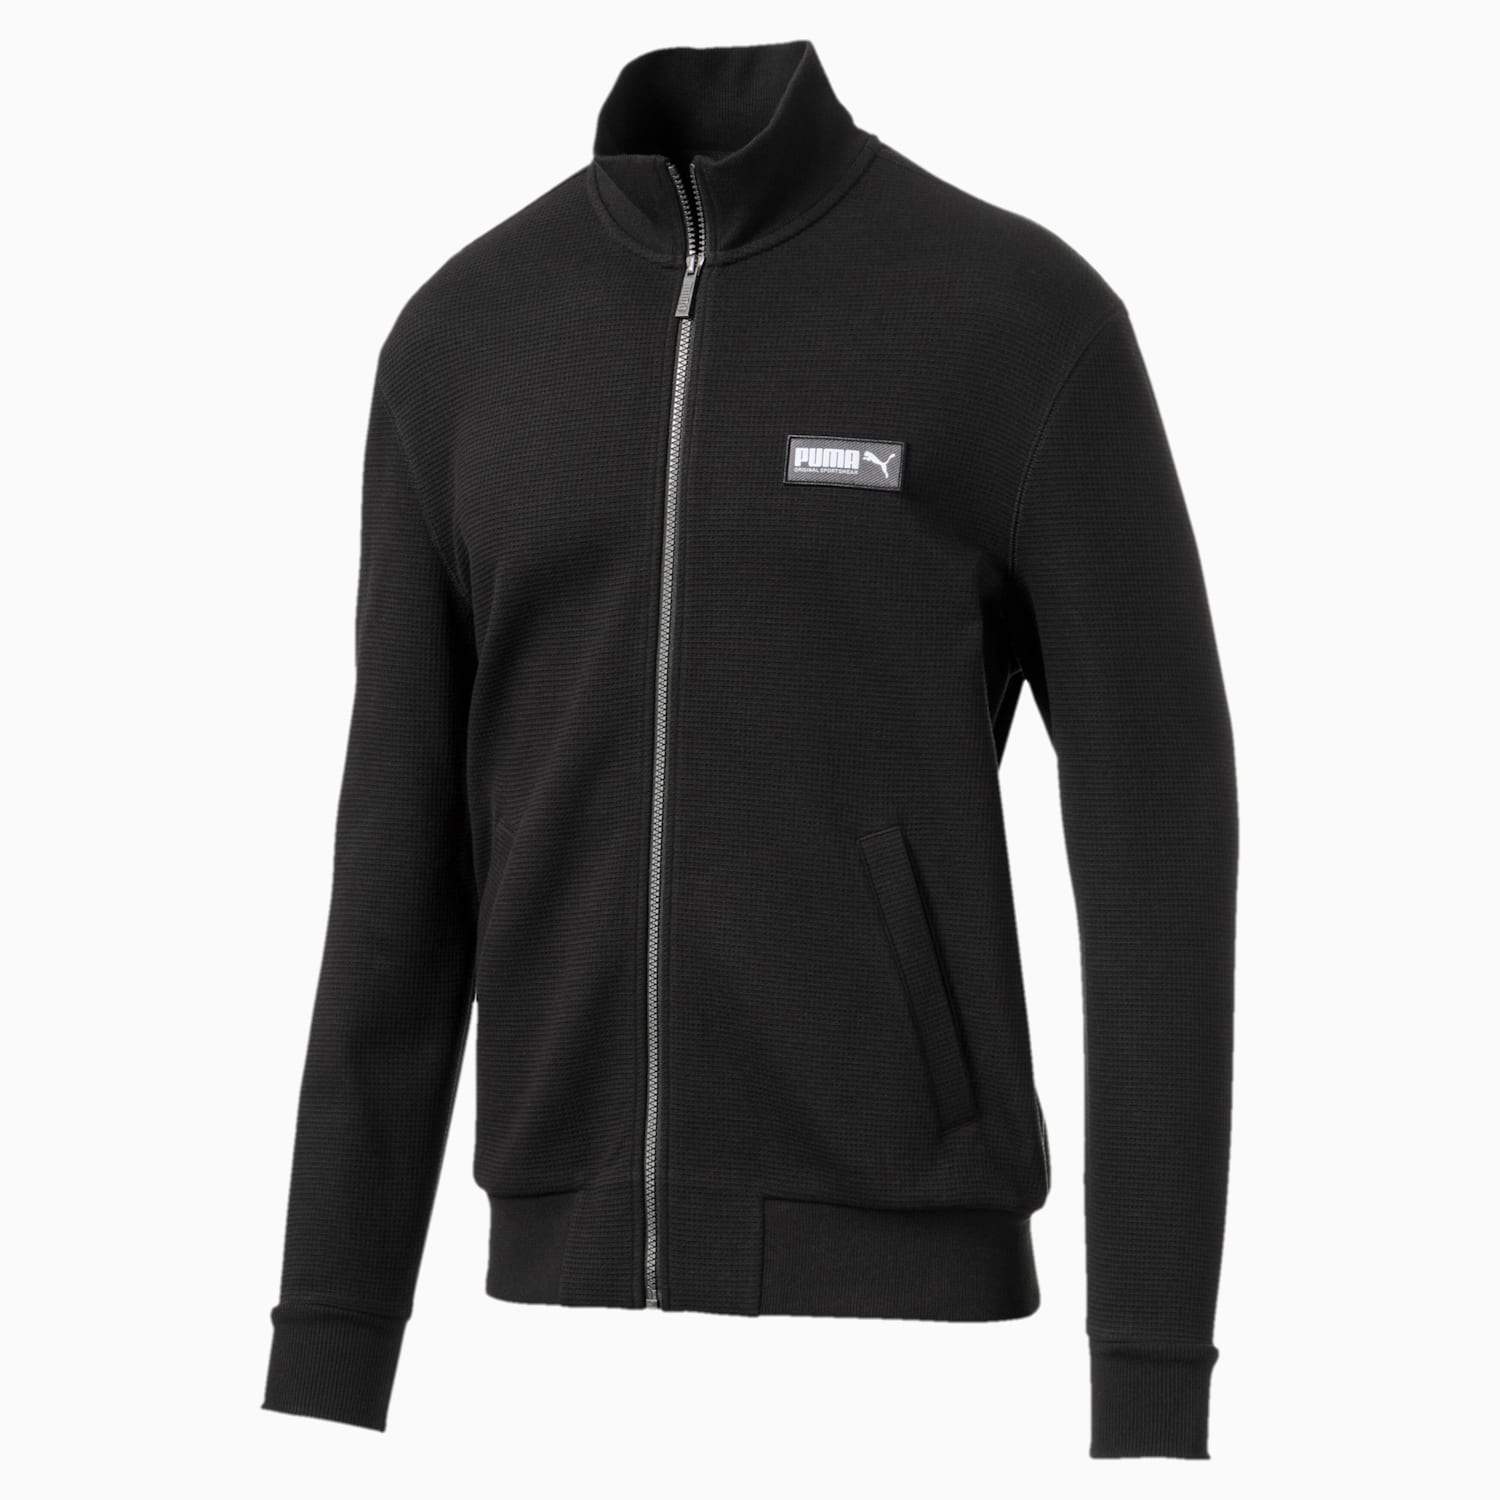 Fusion Men's Jacket-580168-01 - Discount Store